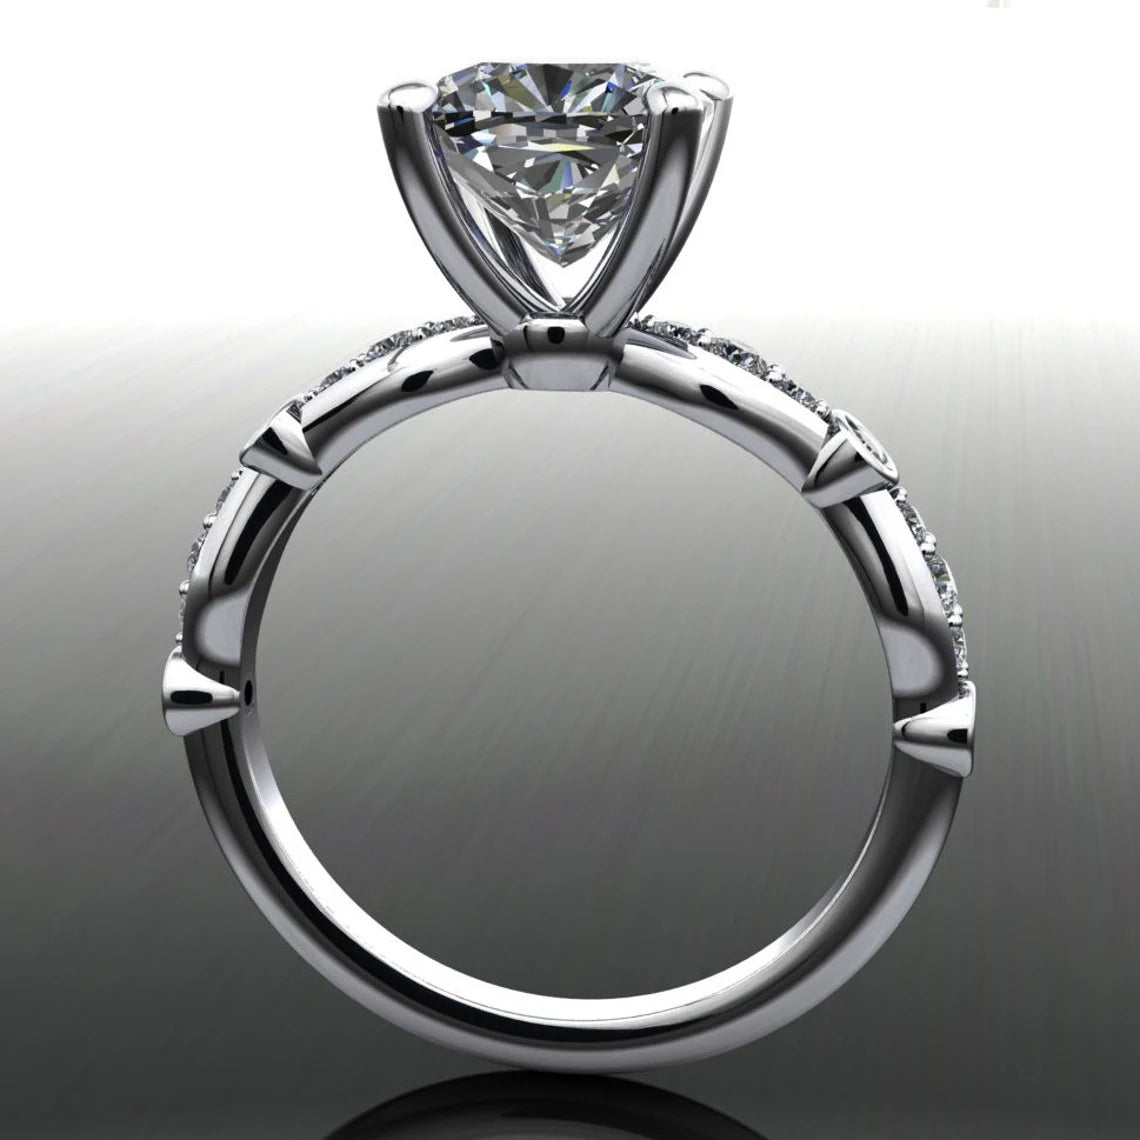 amelia ring - 2 carat cushion cut NEO moissanite engagement ring, colorless moissanite - J Hollywood Designs